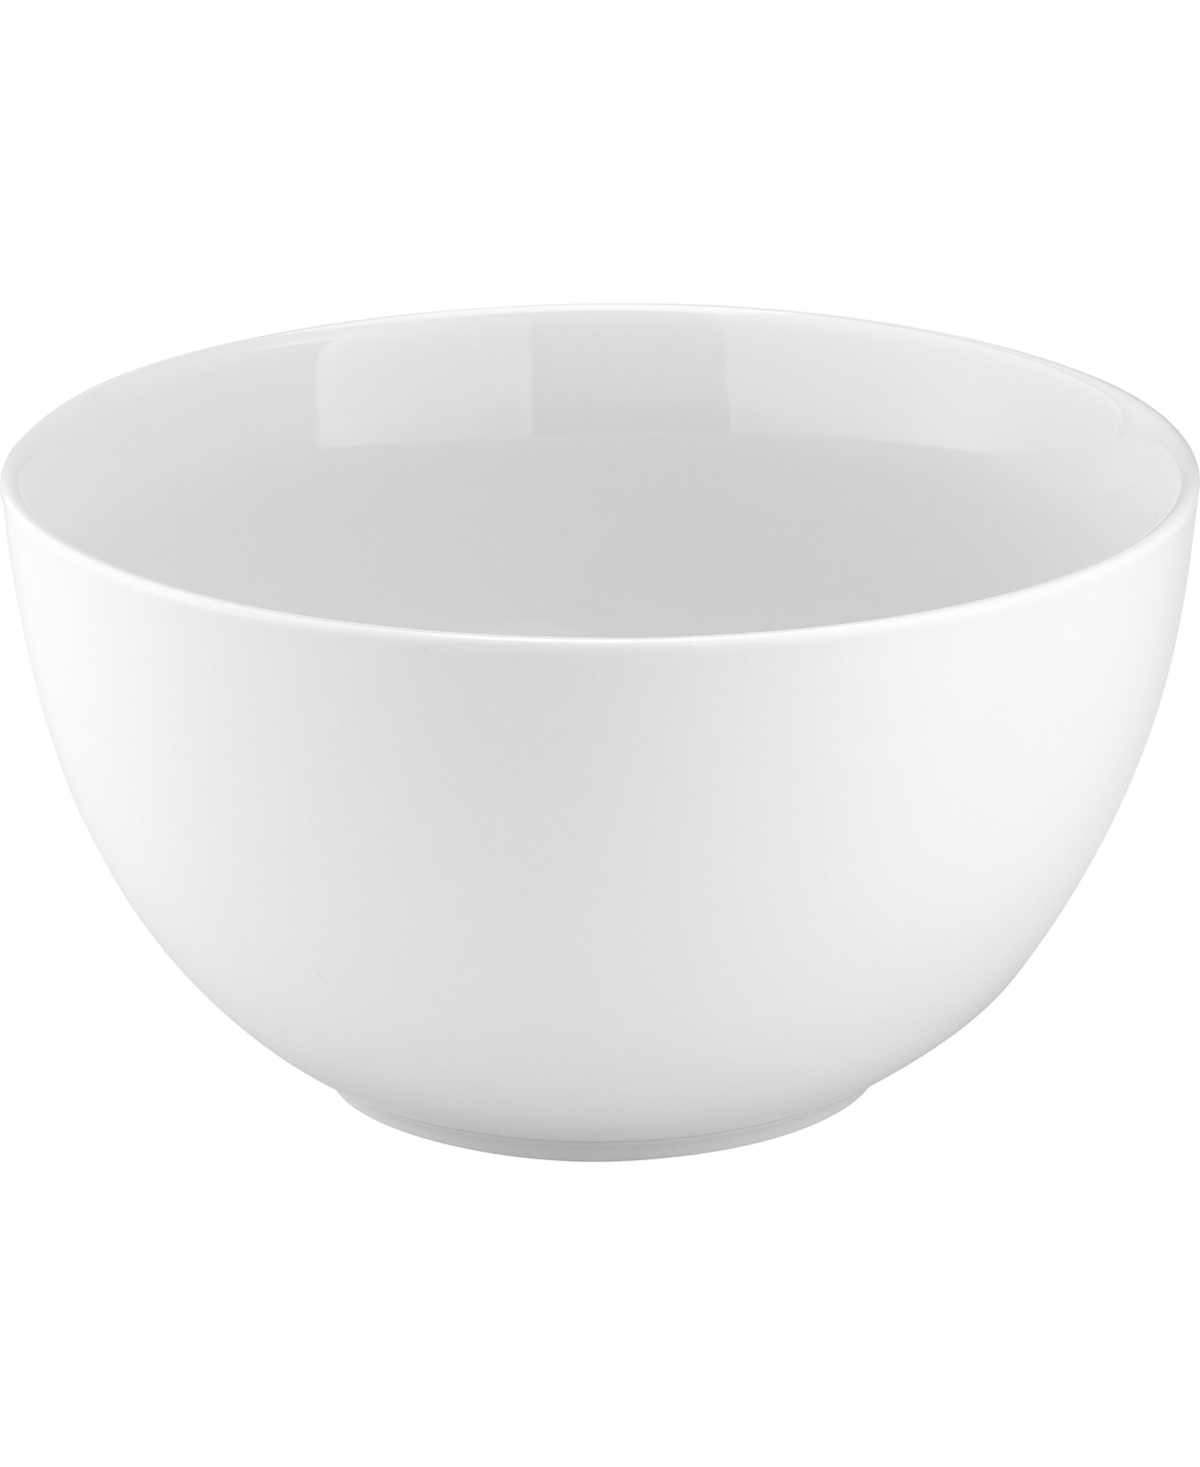 Whiteware 95 oz. Bowl, Created for Macy's - White